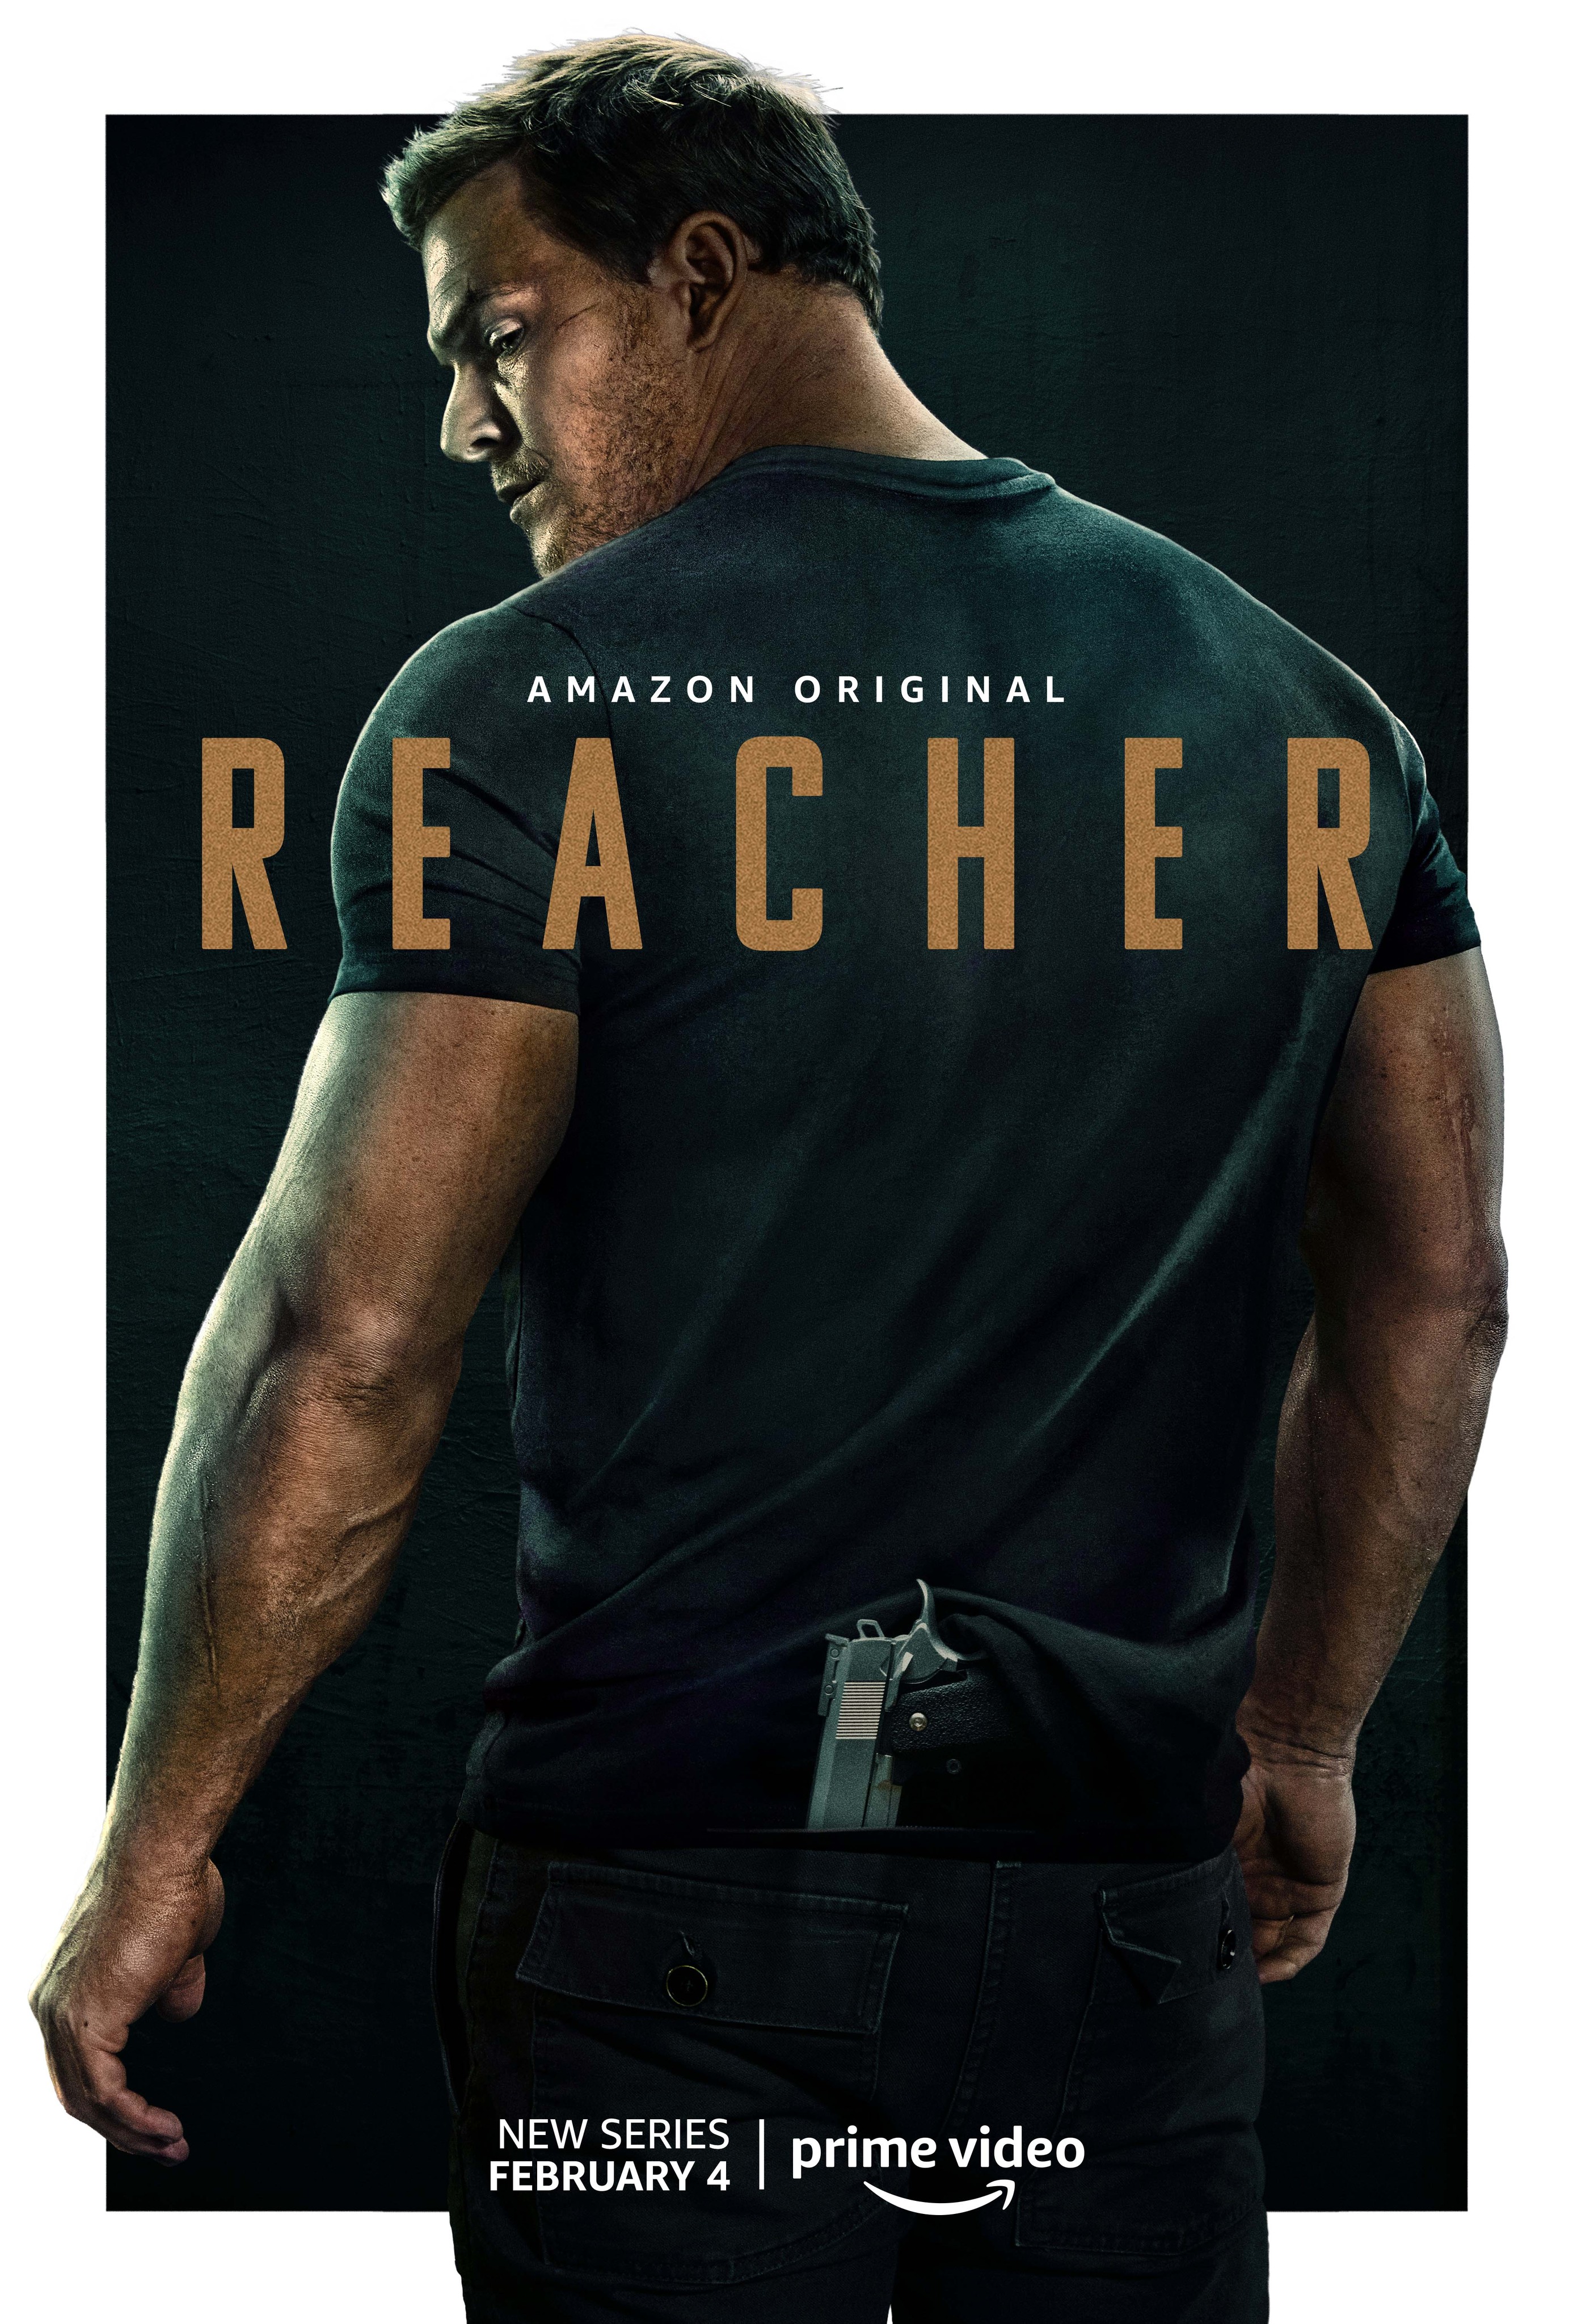 Reacher season 2 release date, trailer, cast and more